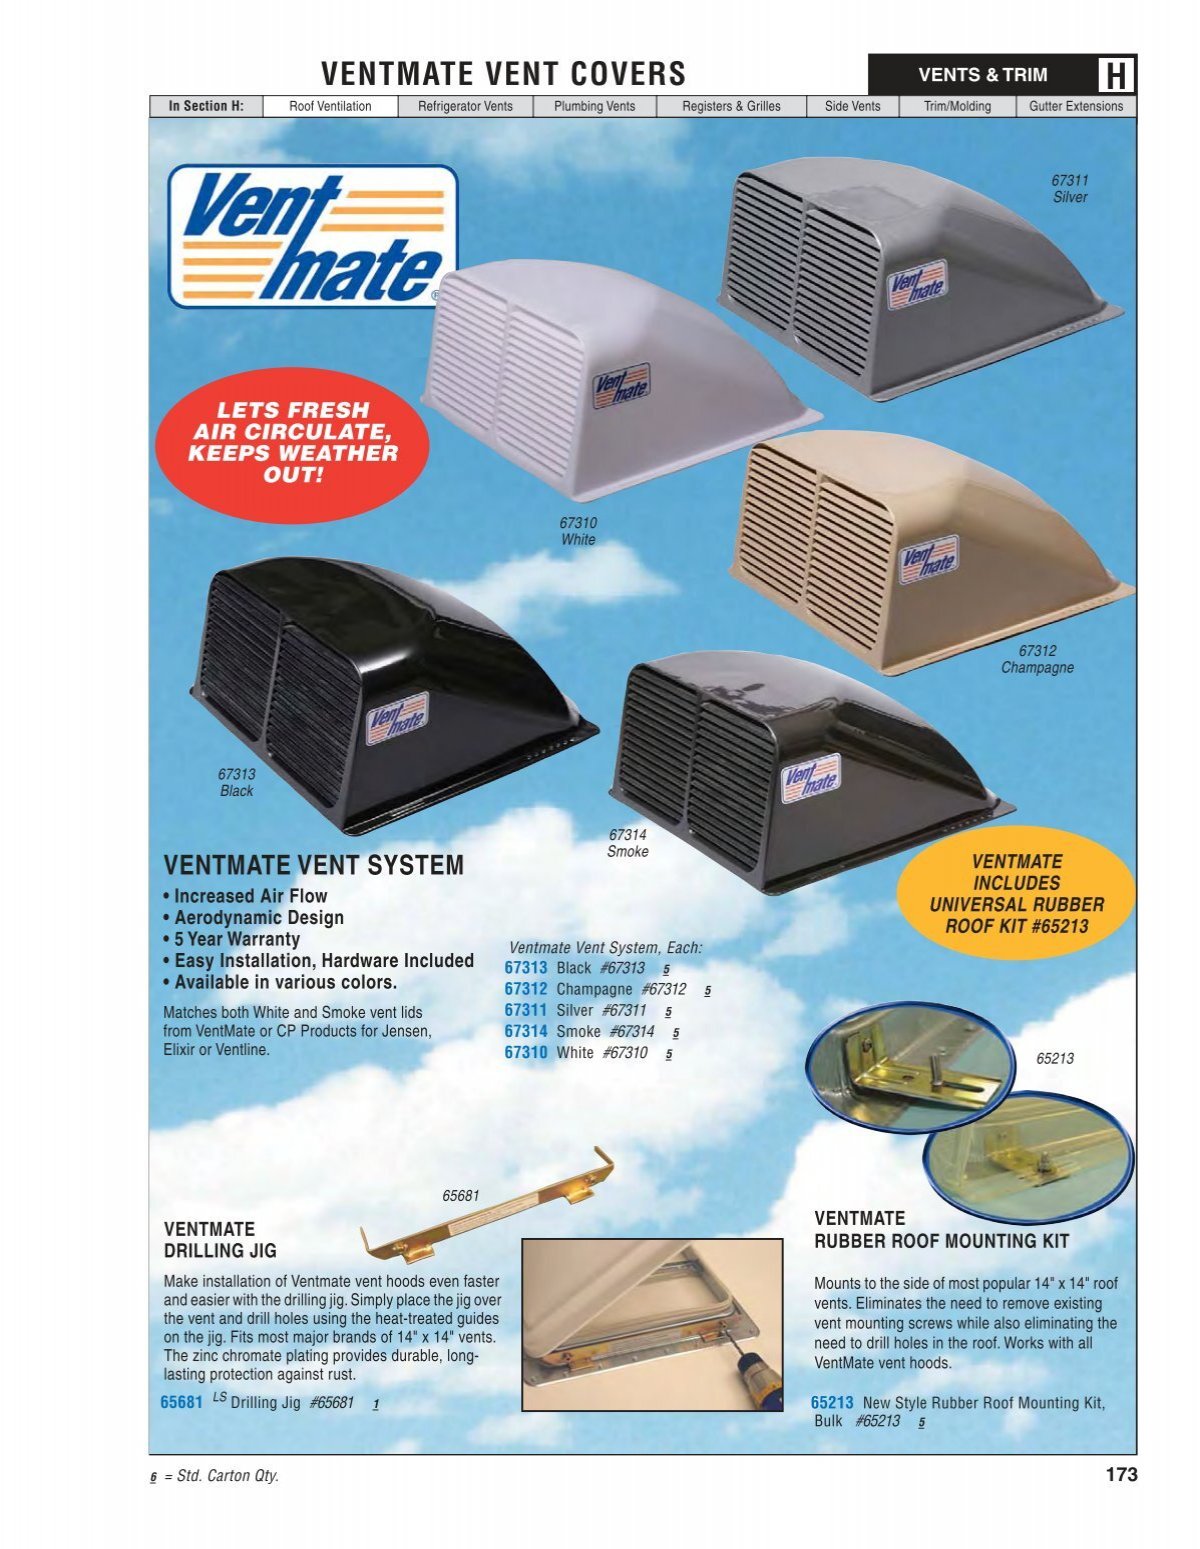 2012 14 RV Roof Fan Vent with Rain Sensor | 12 Volt 4 Speed Motor Remote Intake Exhaust Smoke Lid Ventilation Cover | Bathroom Ceiling Camper